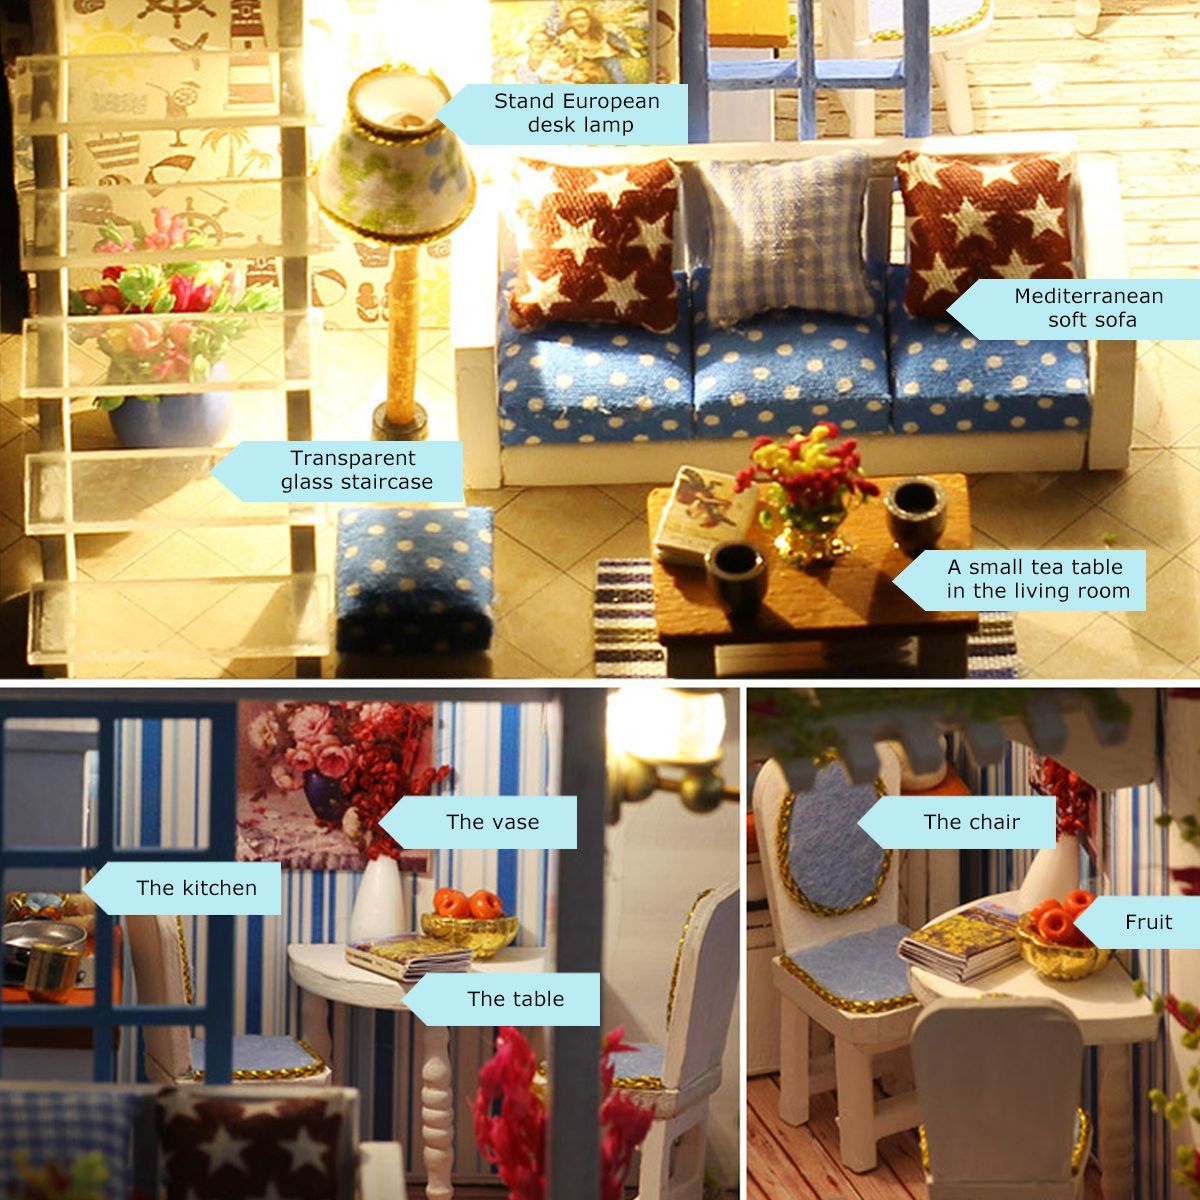 DIY-Miniature-Dollhouse-with-Furniture-Kit-Children-Assemble-Mini-Doll-House-Model-Toys-1634217